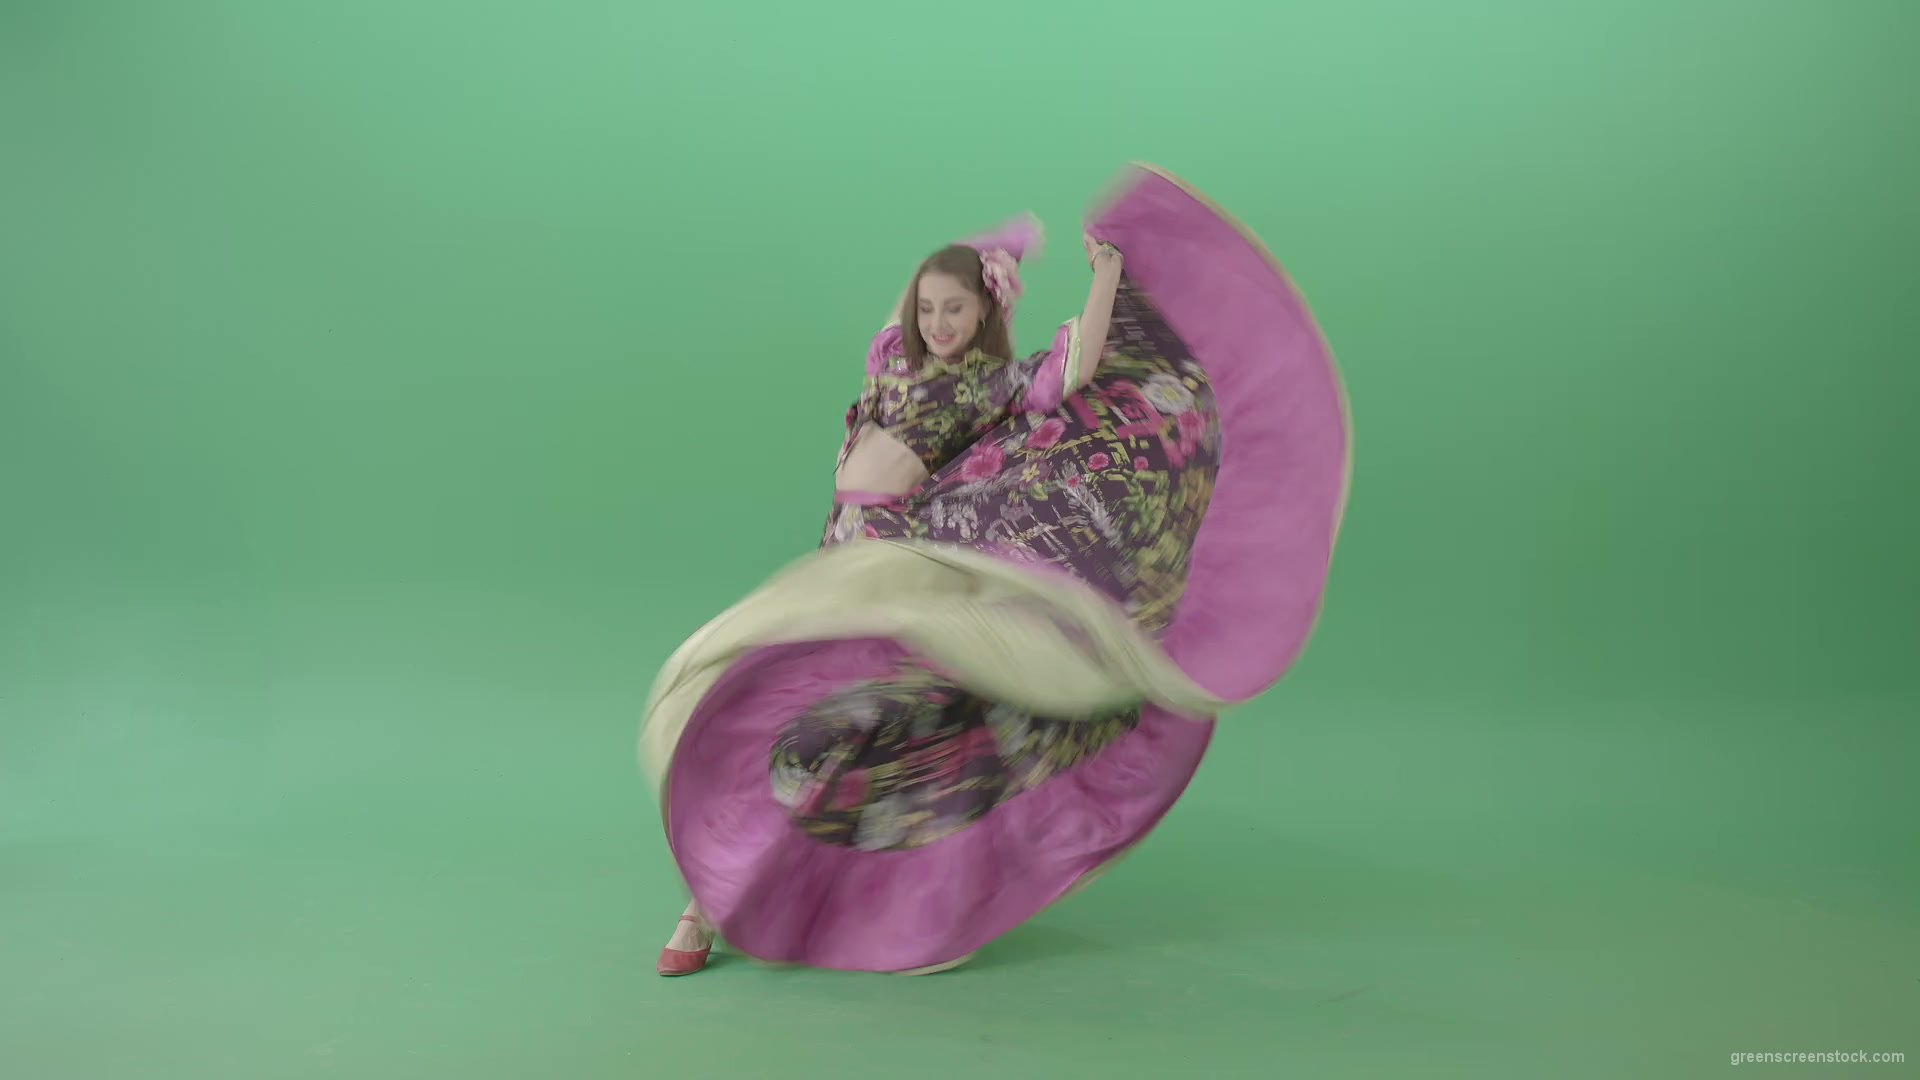 Lovely-Tzigane-romana-gypsy-women-waving-pink-dress-dancing-folk-isolated-in-green-screen-studio-4K-Green-Screen-Video-Footage-1920_004 Green Screen Stock